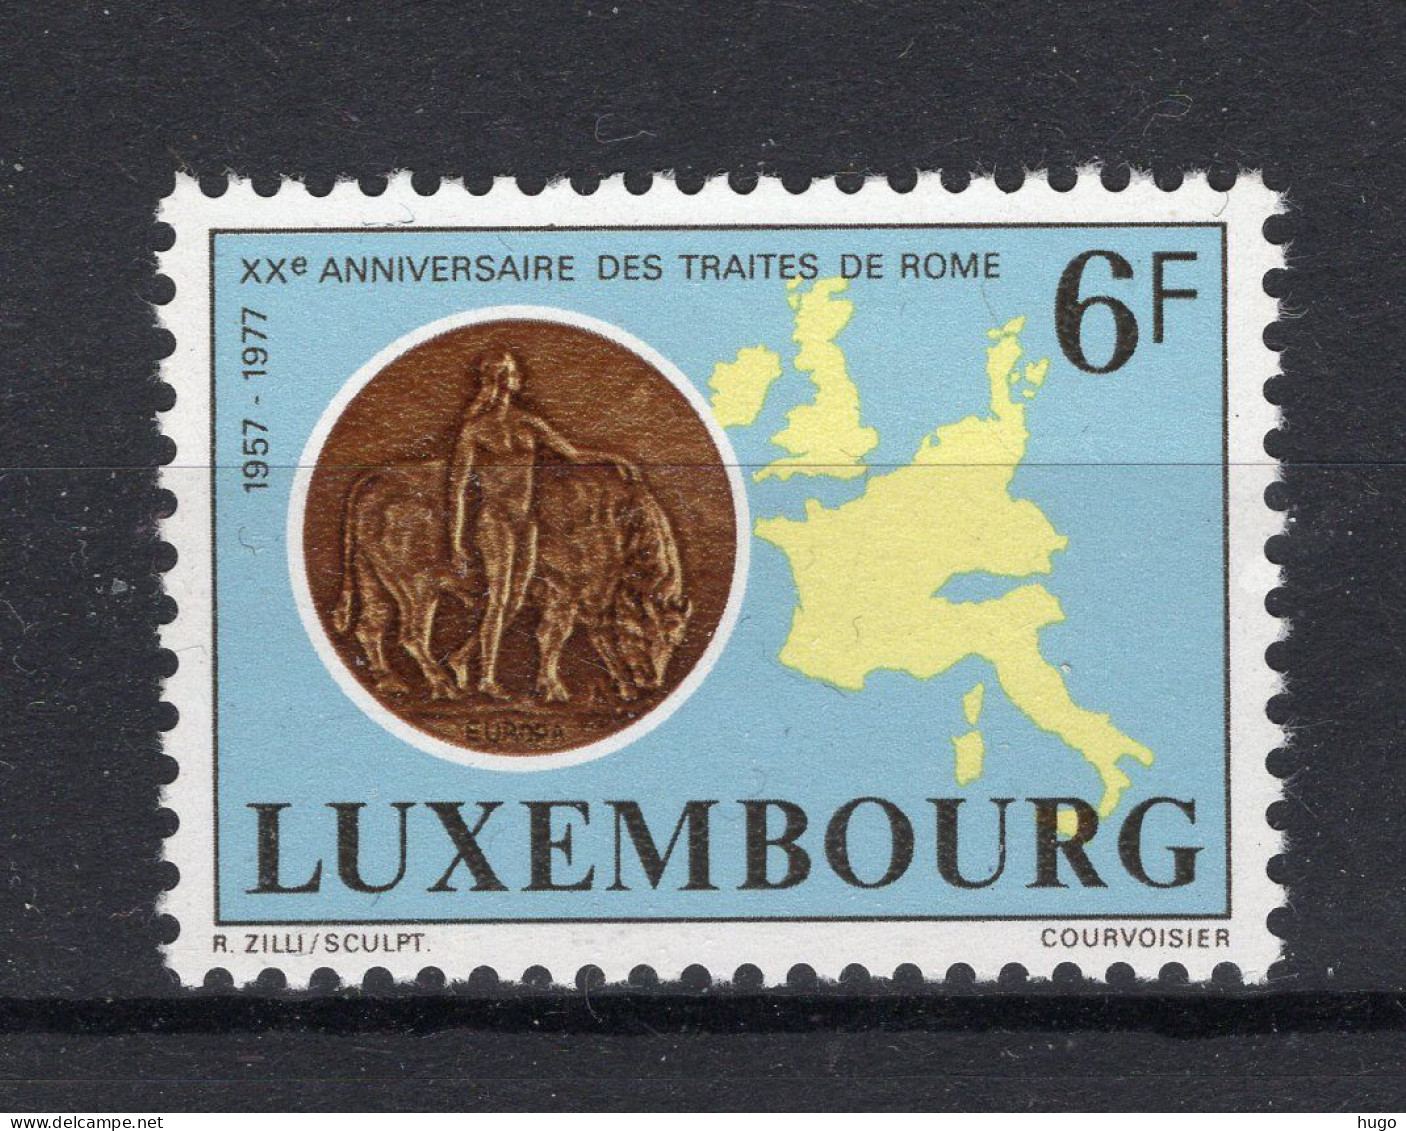 LUXEMBURG Yt. 906 MNH 1977 - Unused Stamps